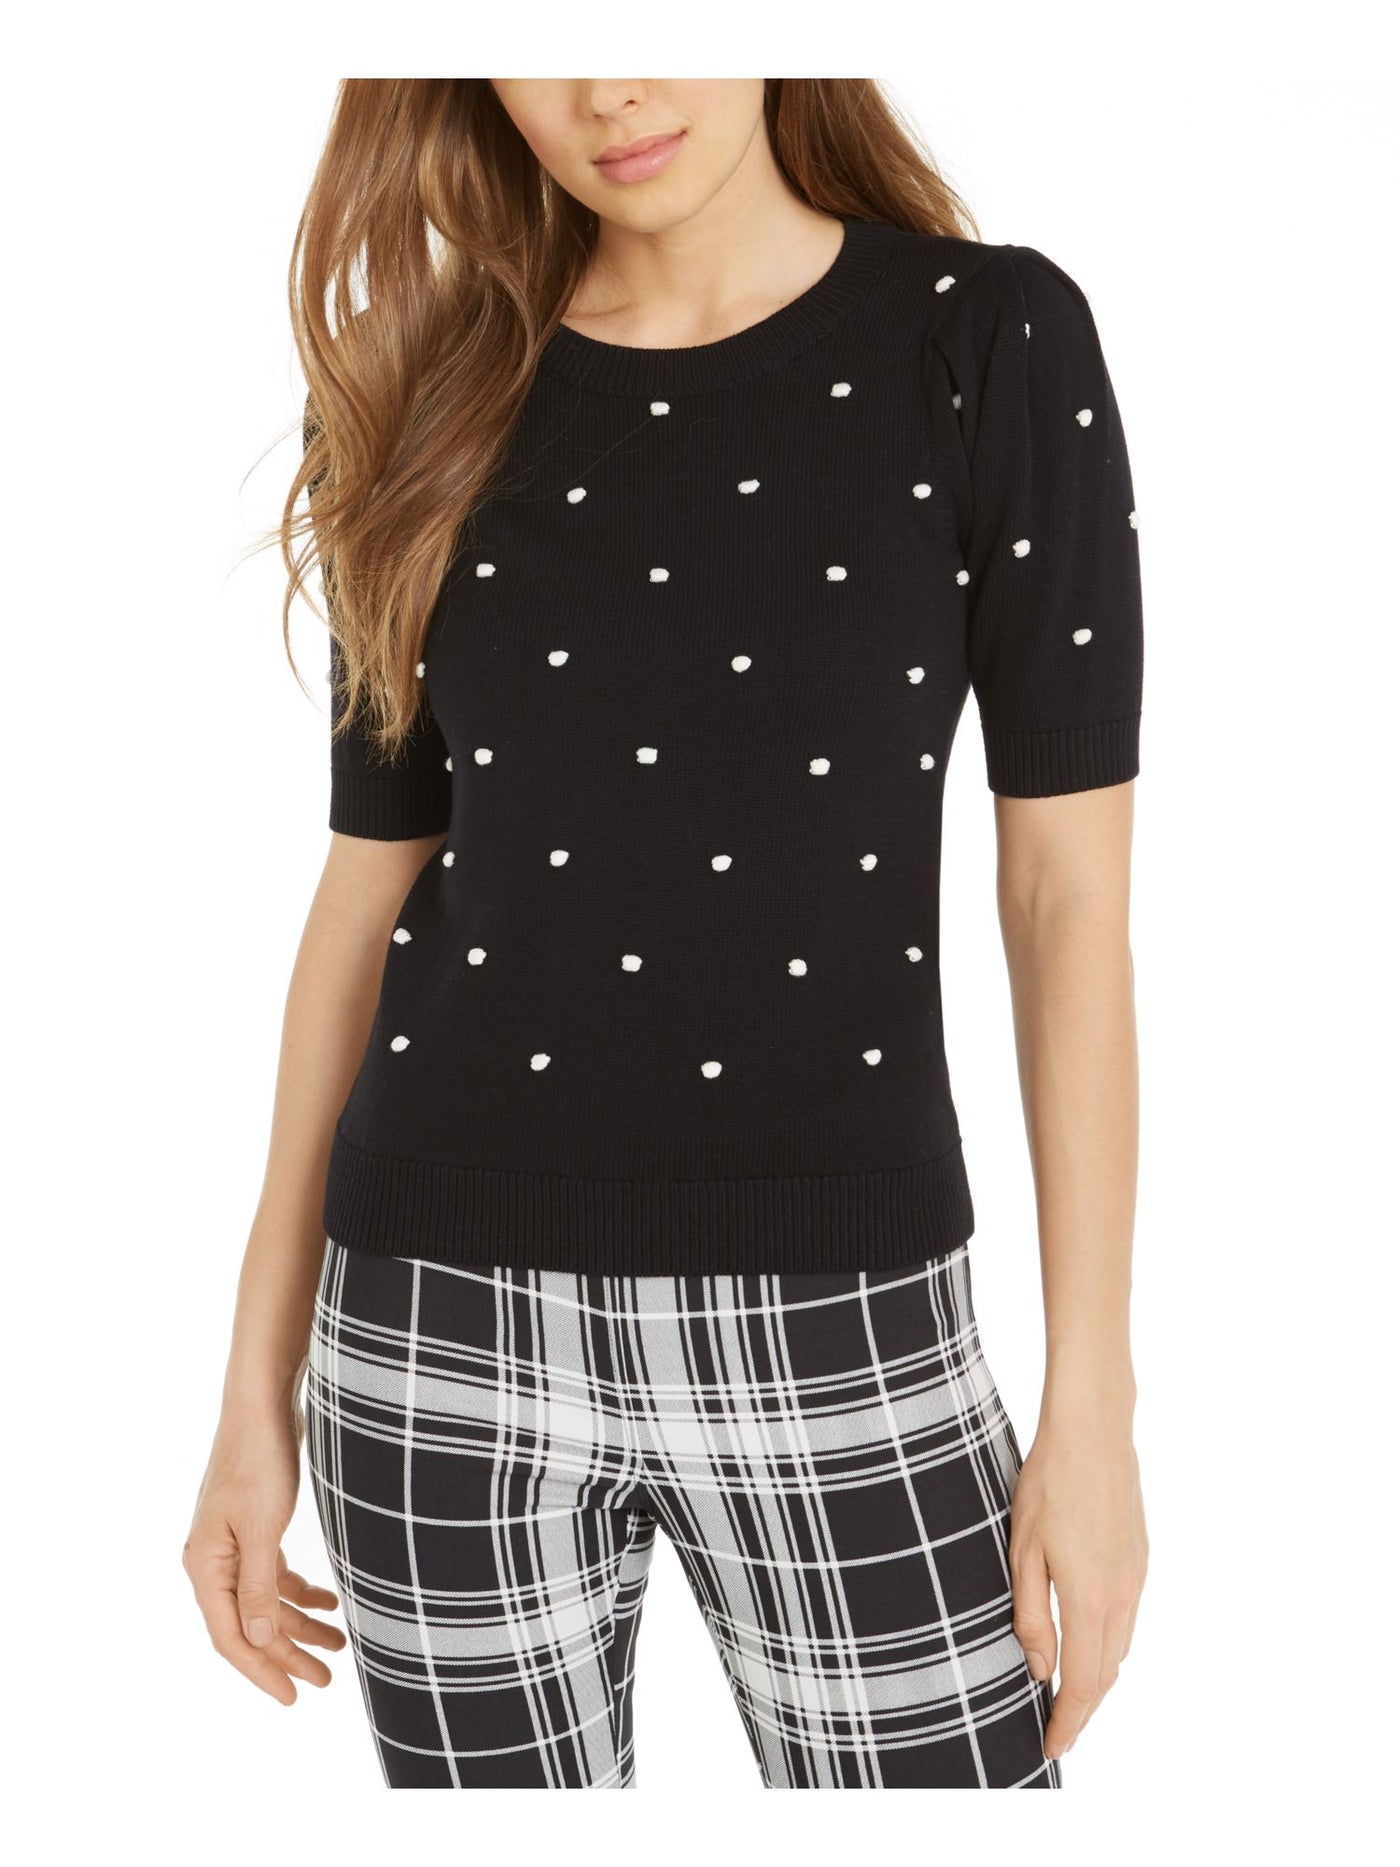 MAISON JULES Womens Black Embroidered Polka Dot Short Sleeve Jewel Neck Sweater XL